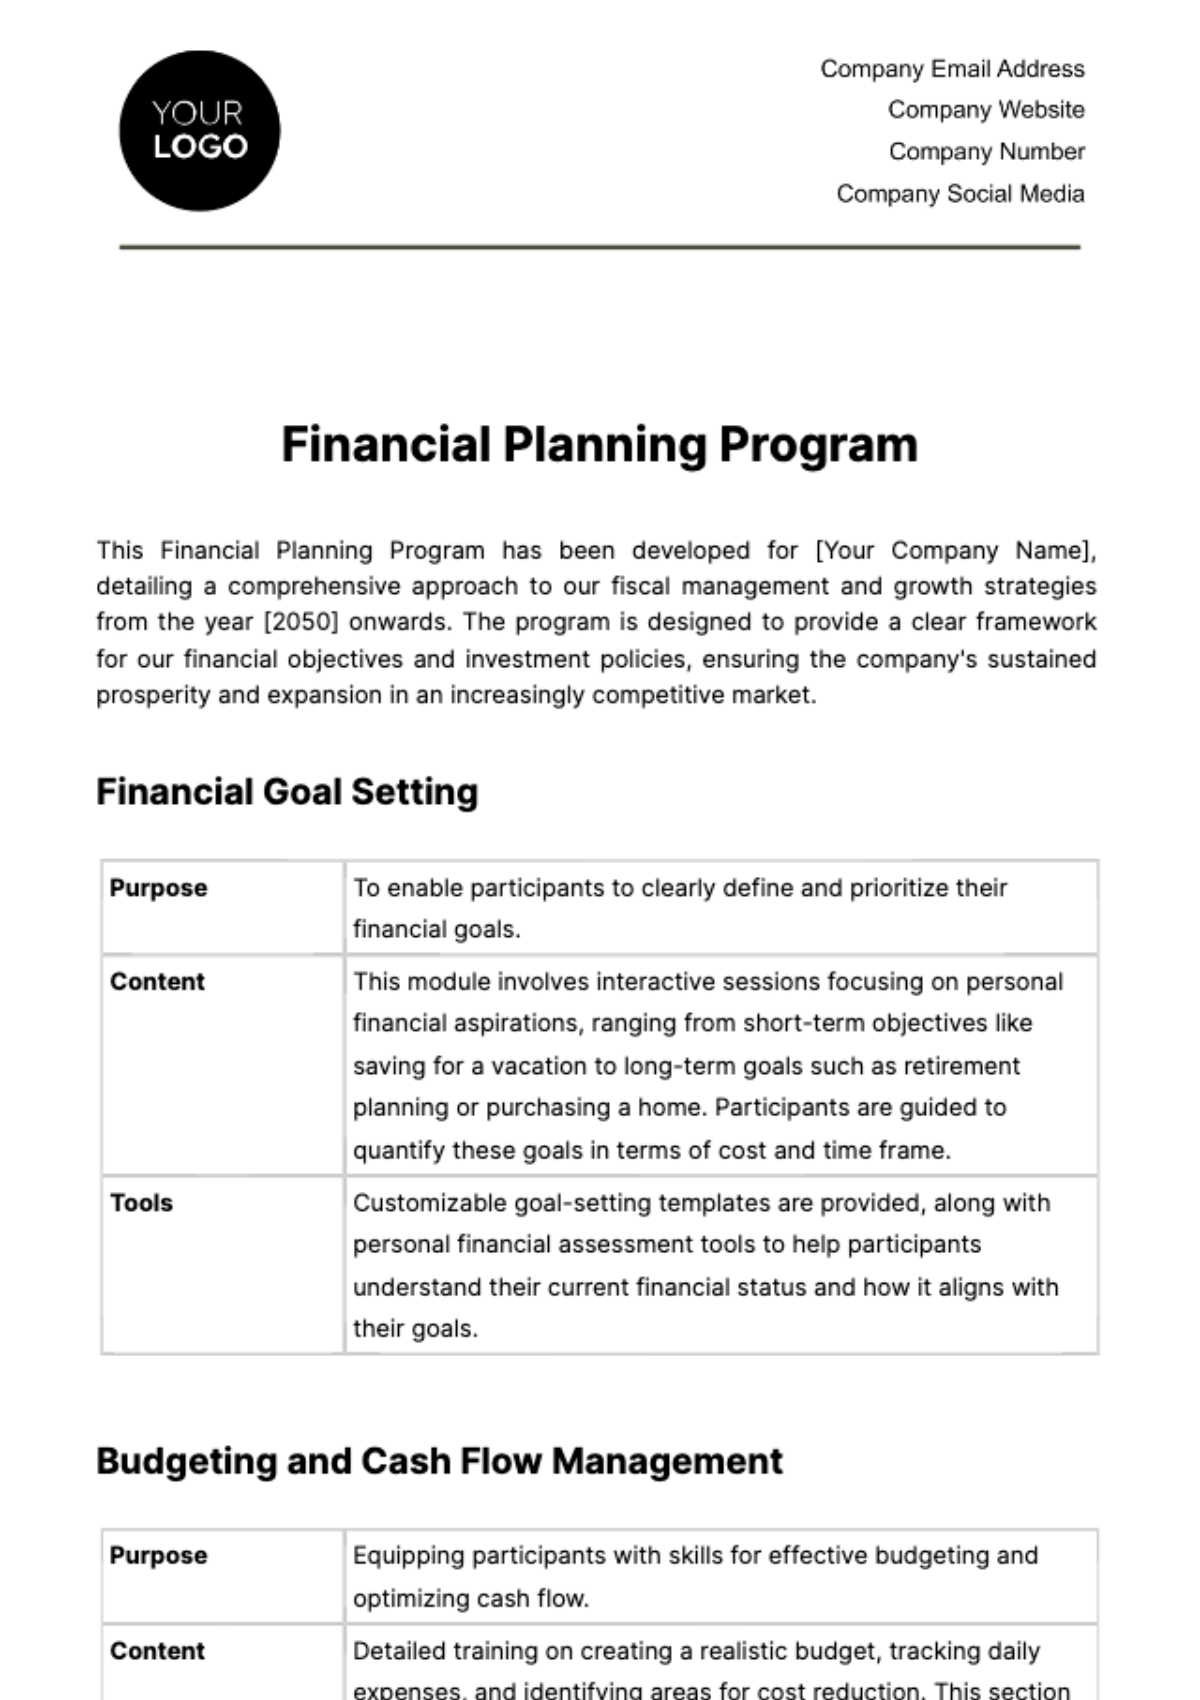 Free Financial Planning Program Template